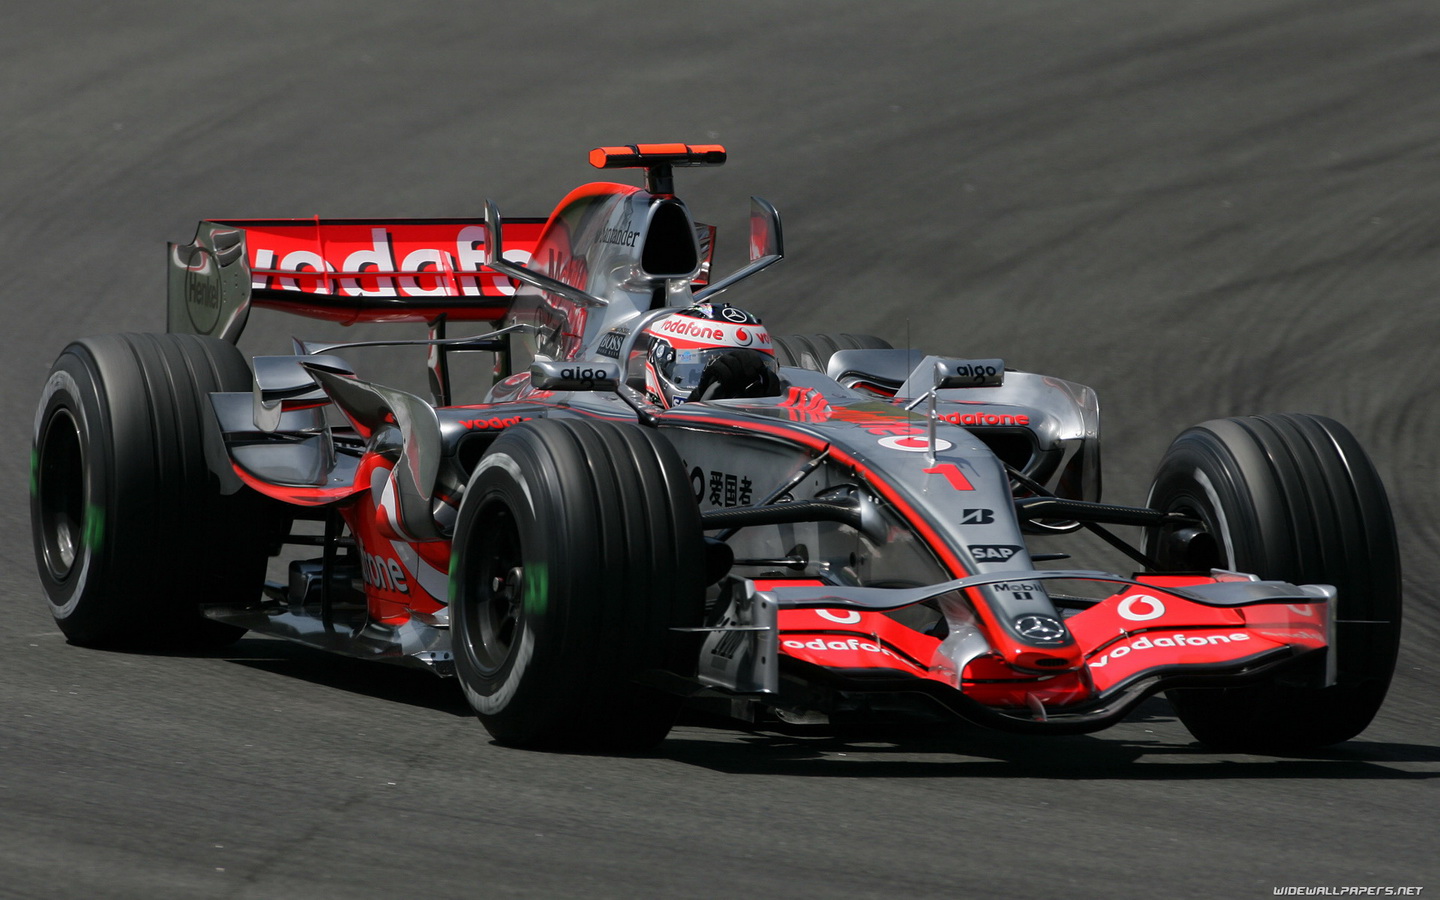 Download wallpaper: bolide on , Formula-1, photo ...